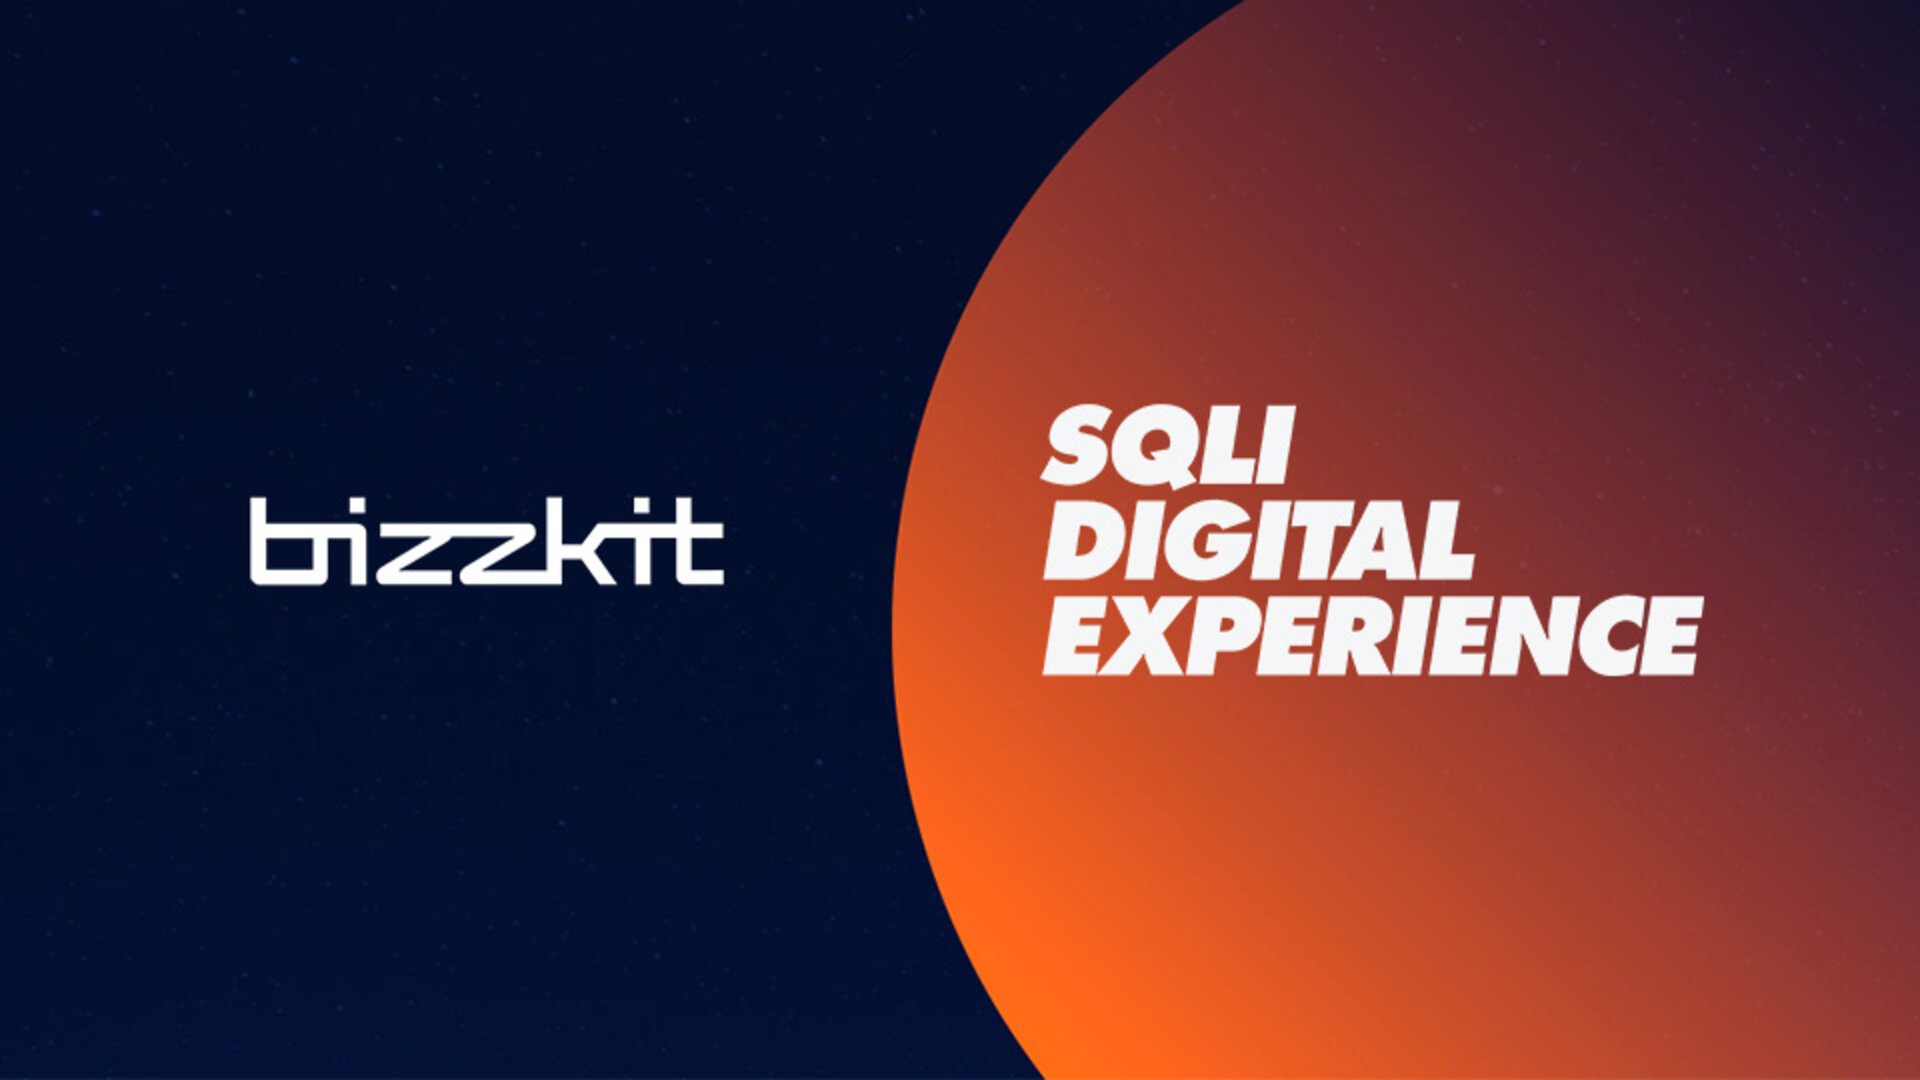 SQLI Nordics is new Bizzkit Solution Partner